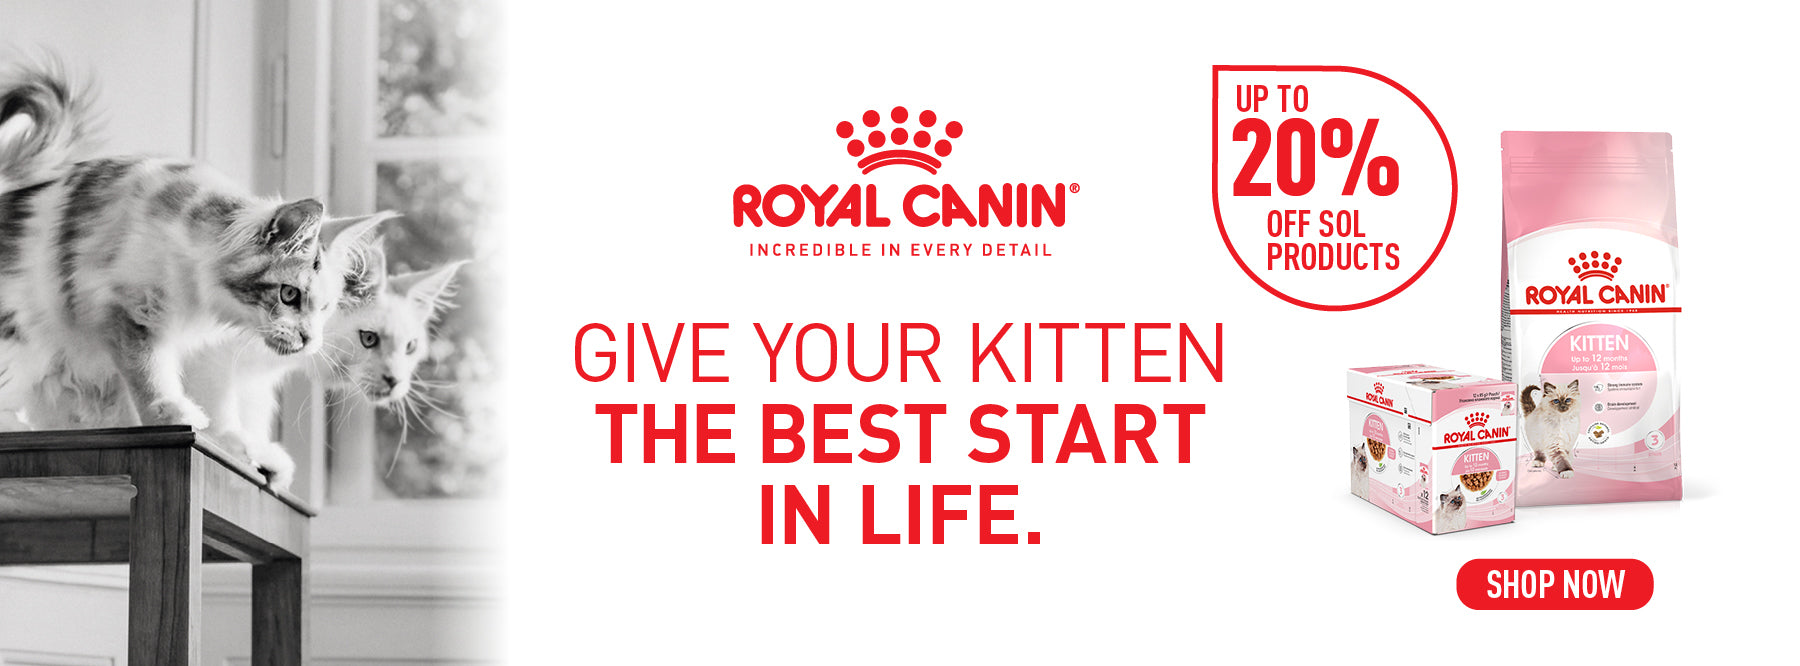 Royal Canin Kitten April Sale